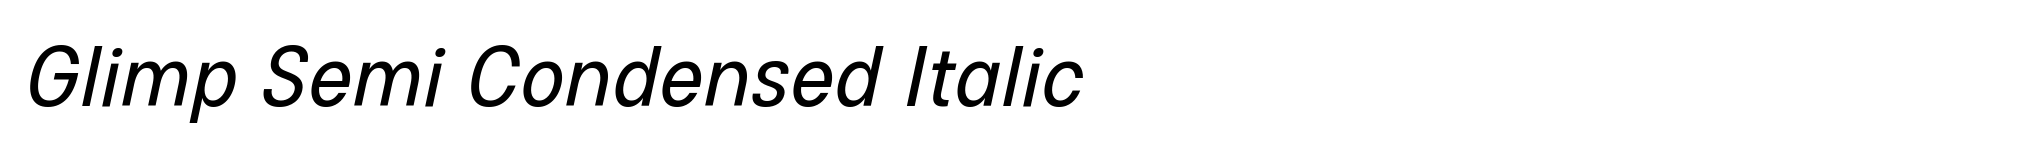 Glimp Semi Condensed Italic image